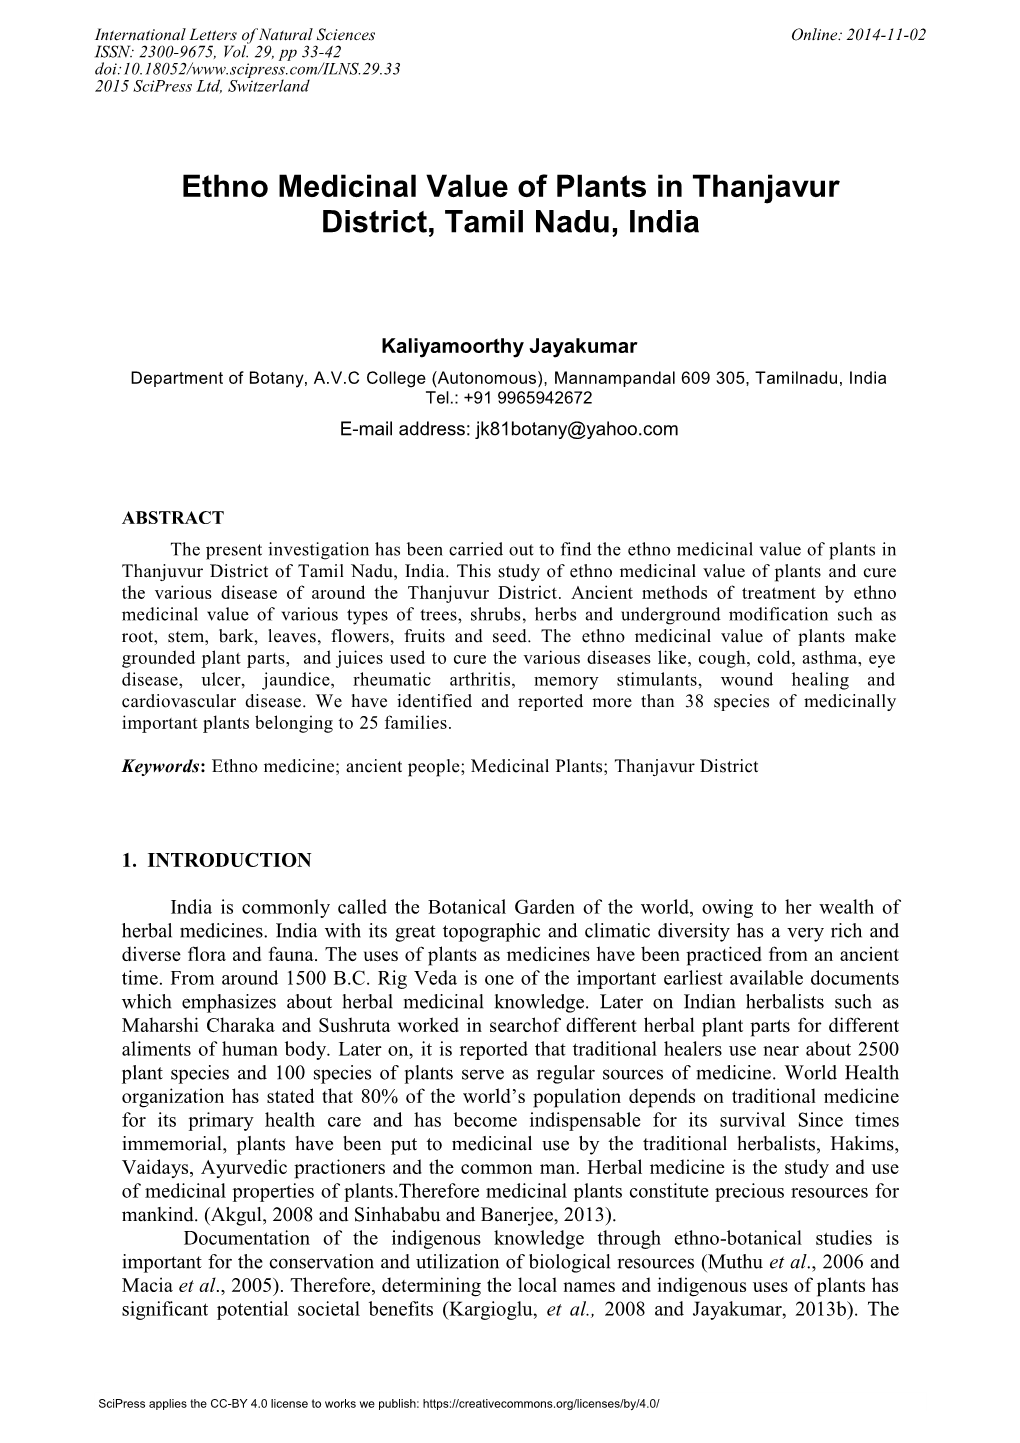 Ethno Medicinal Value of Plants in Thanjavur District, Tamil Nadu, India